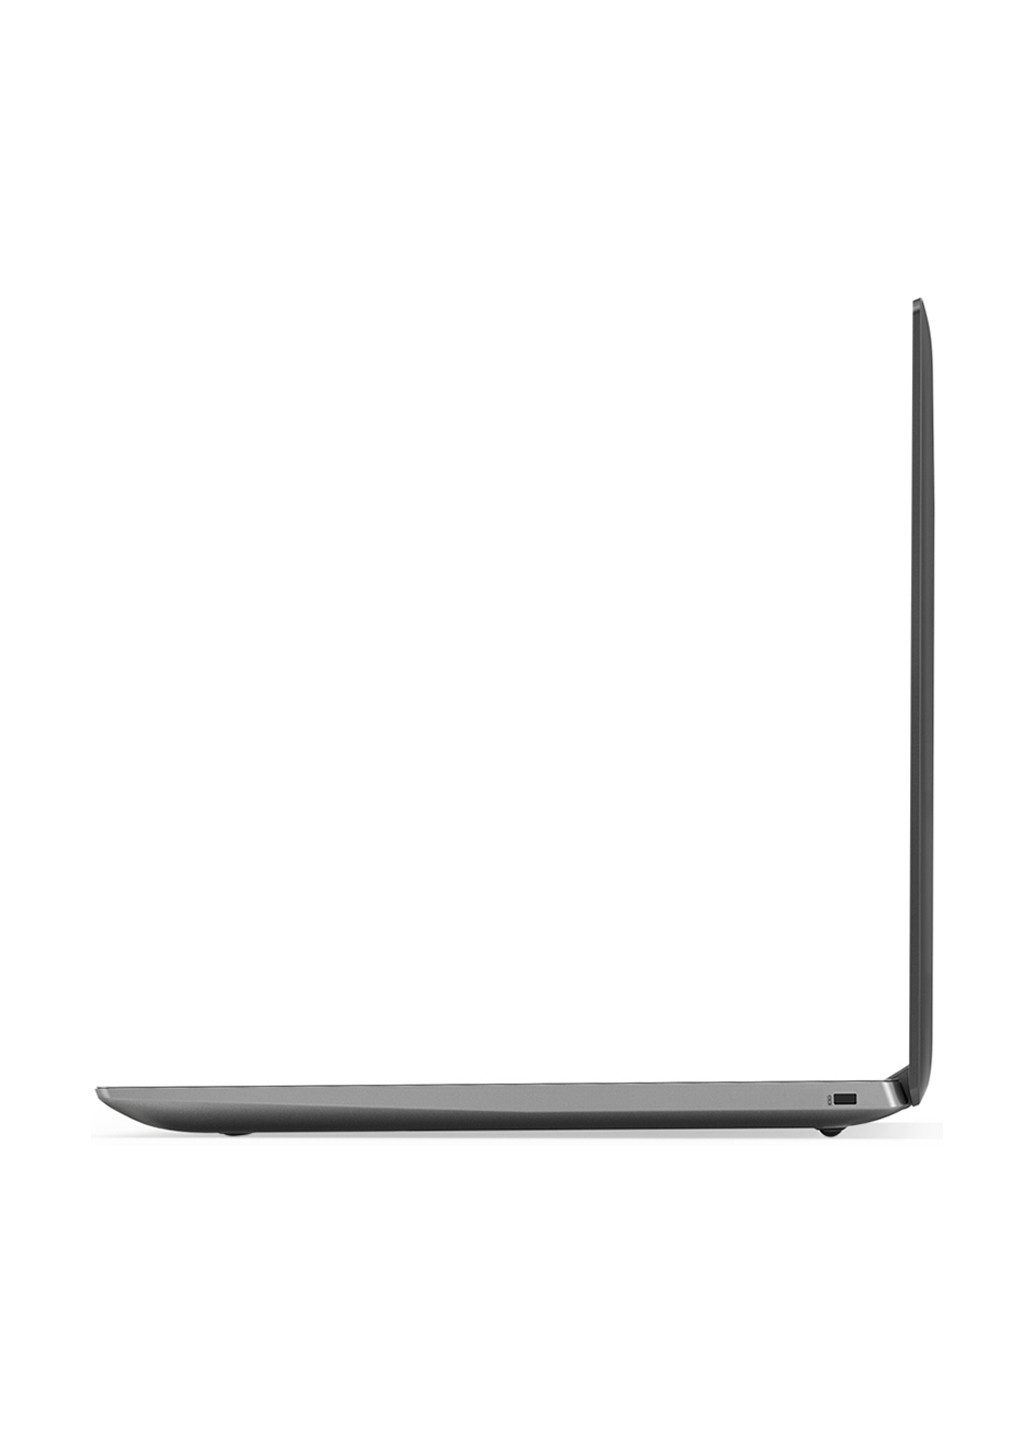 Ноутбук Lenovo ideapad 330-15 (81dc012era) onyx black (132994122)